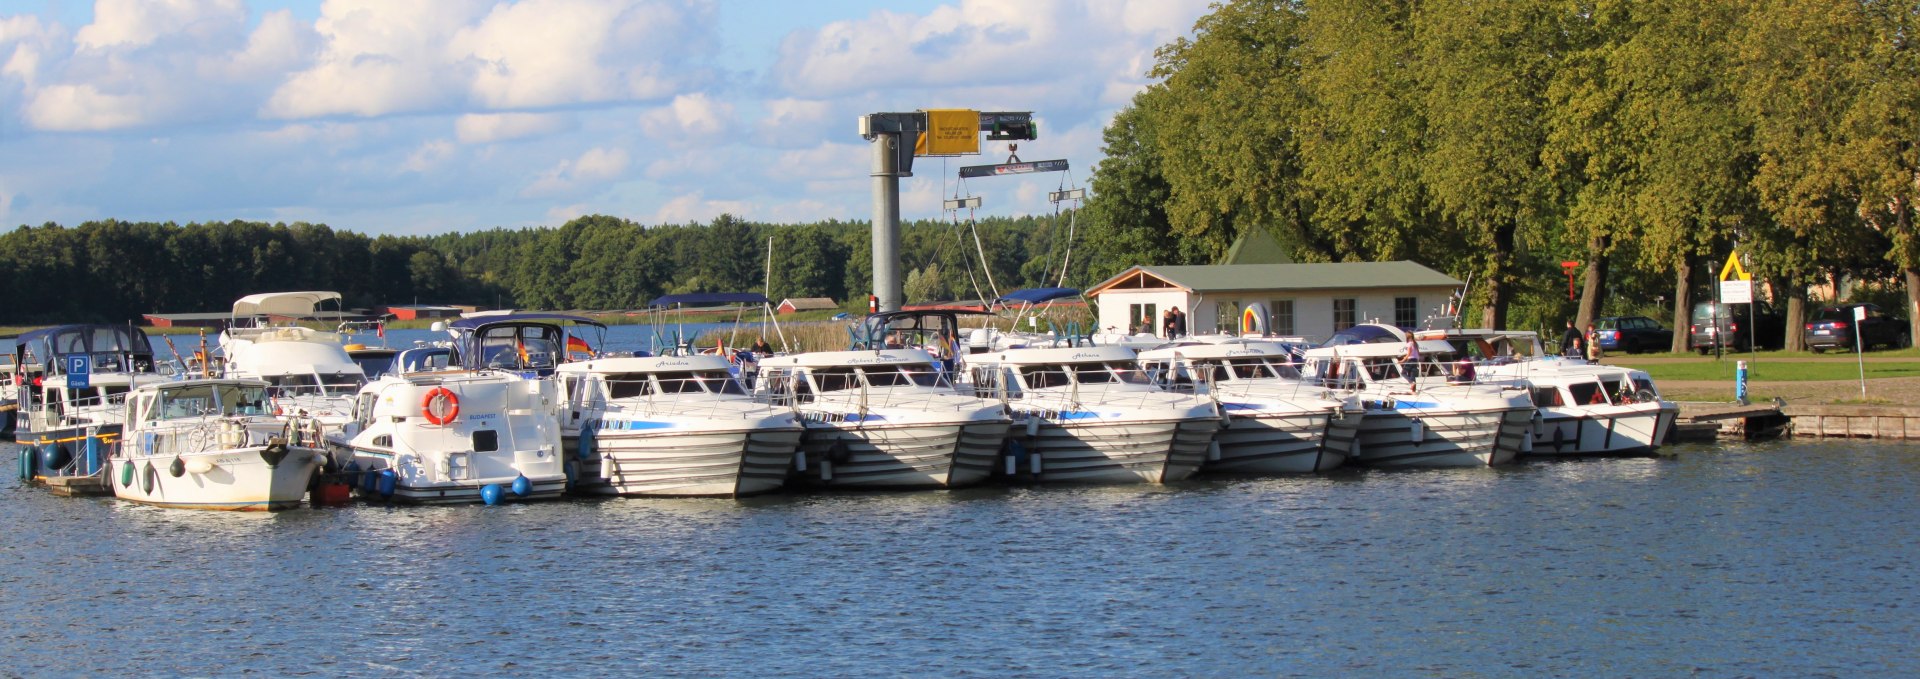 Boat rental & yacht charter Halbeck in Rheinsberg, © Reederei Halbeck